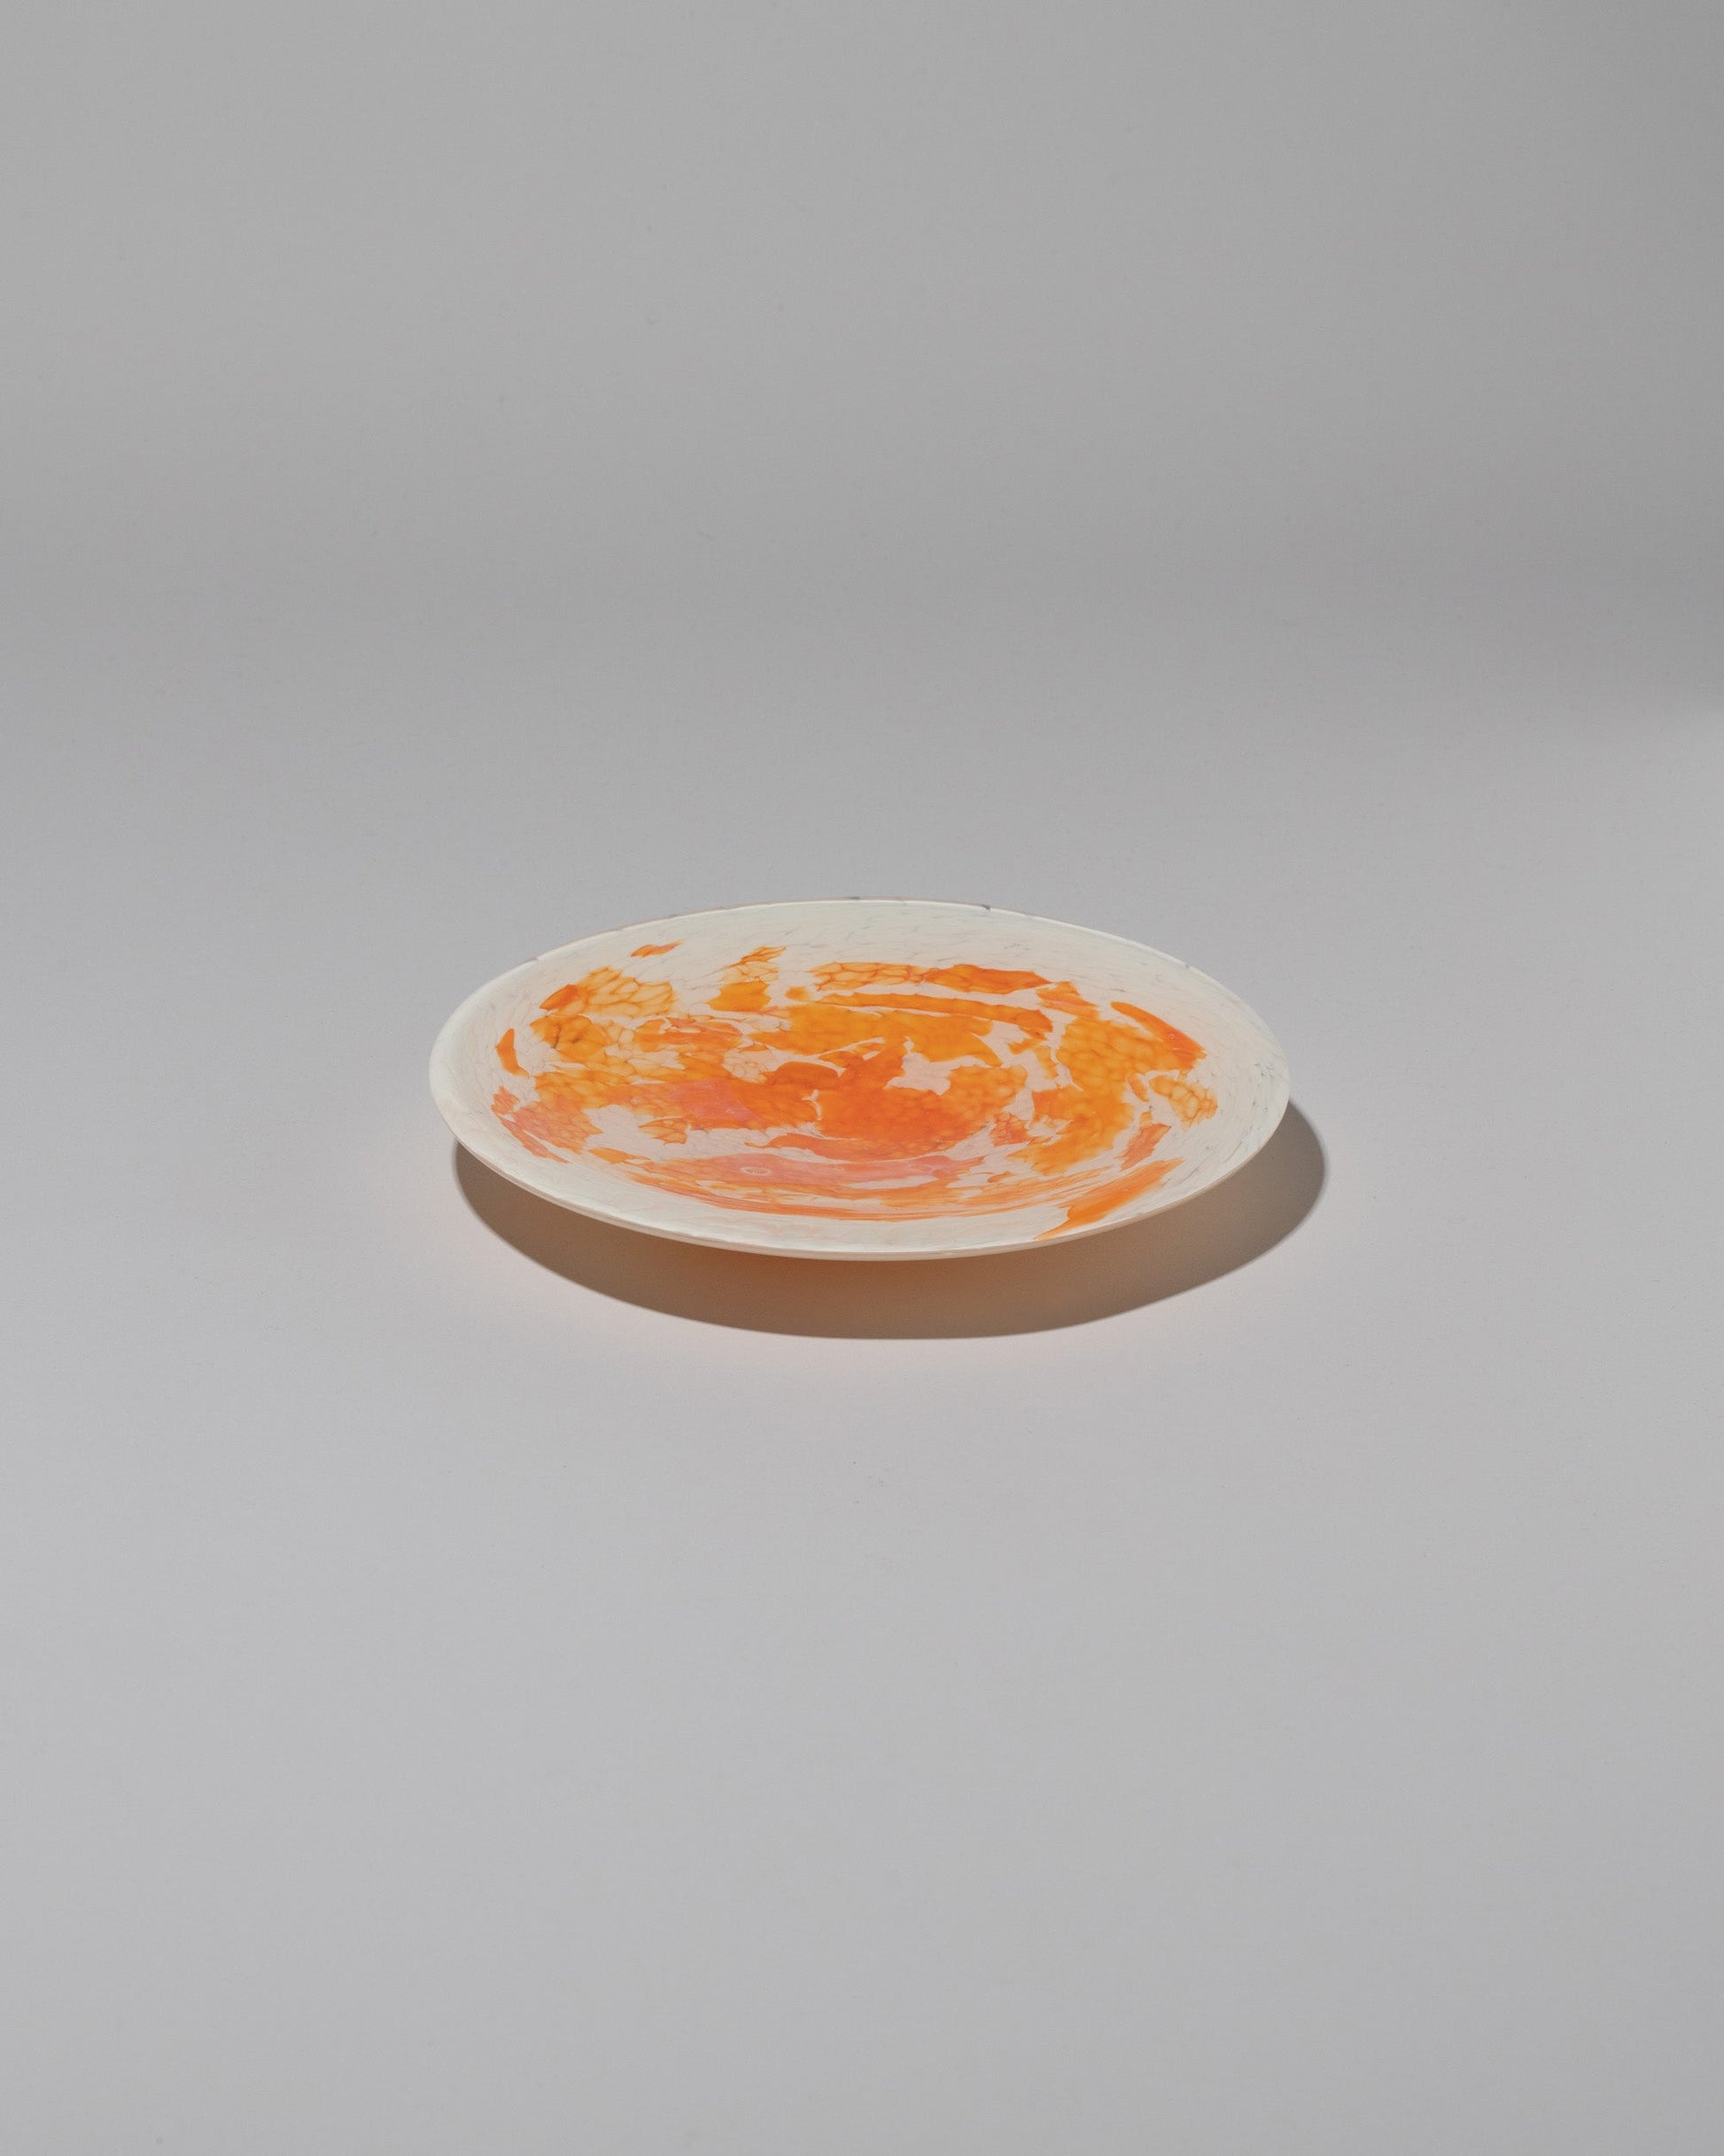 Stories of Italy Orange Nougat Dessert Plate on light color background.